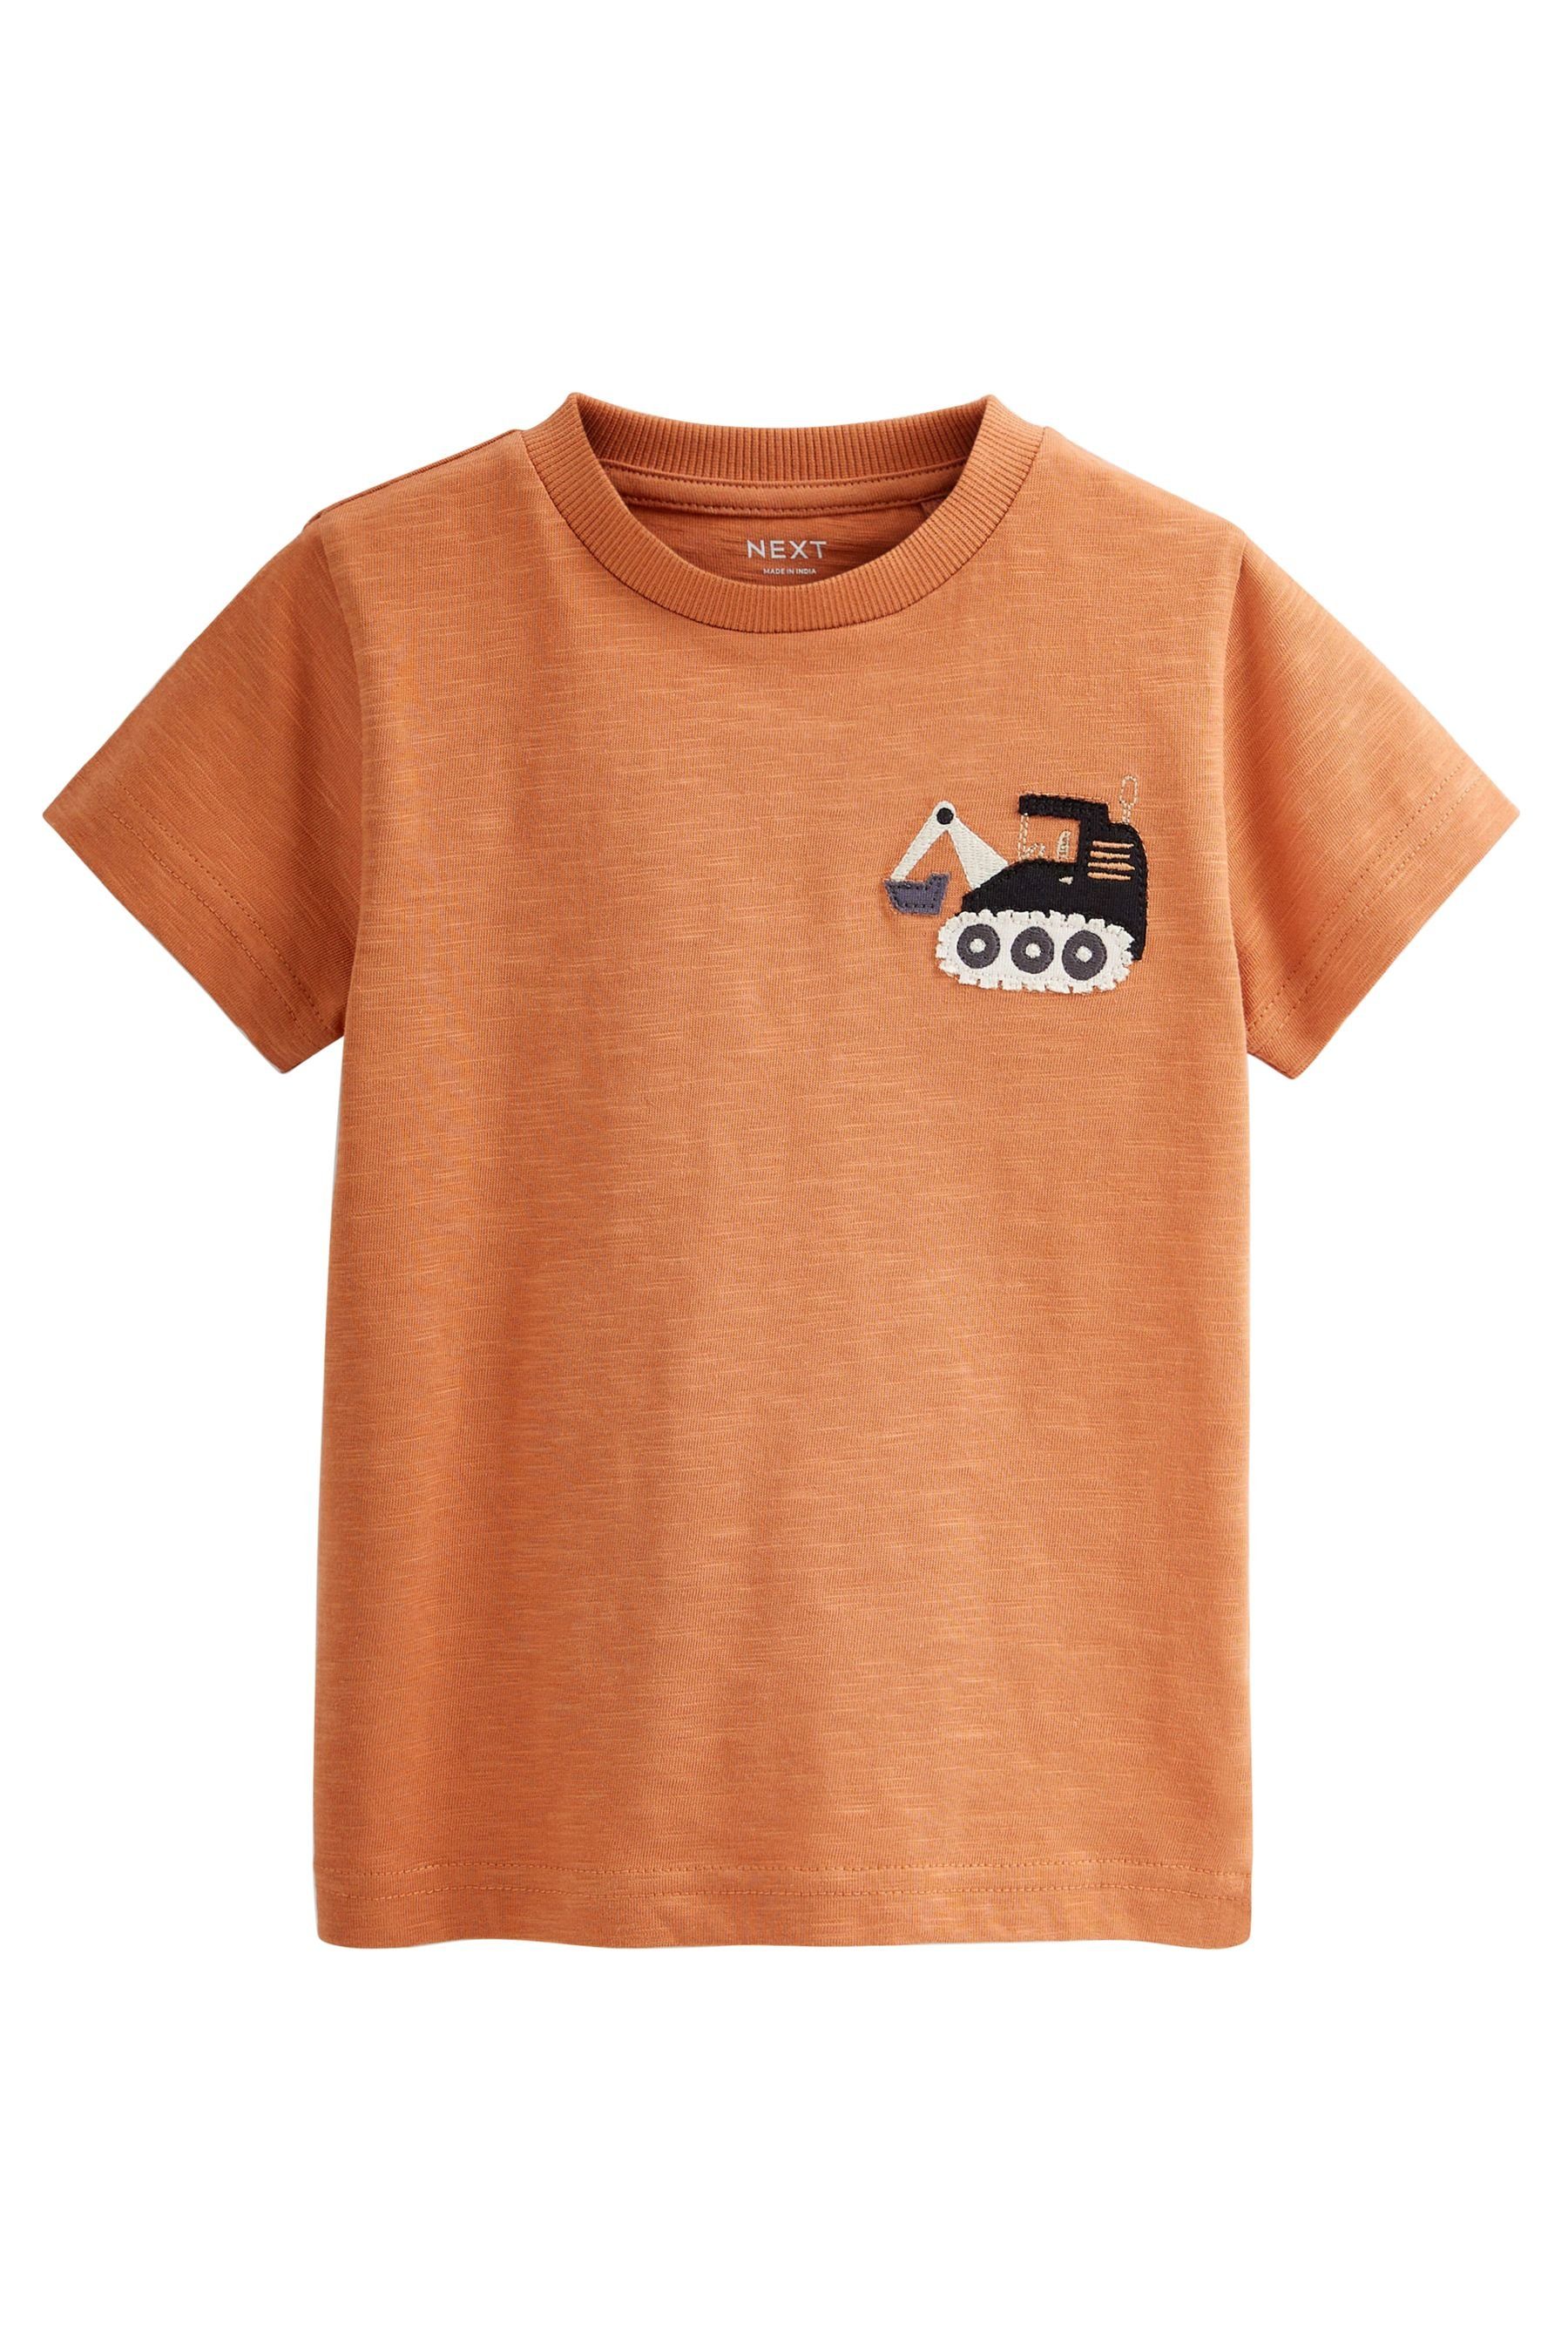 T-Shirt (4-tlg) Monochrome Next Figurenmotiv, T-Shirts mit Kurzärmelige 4er-Pack